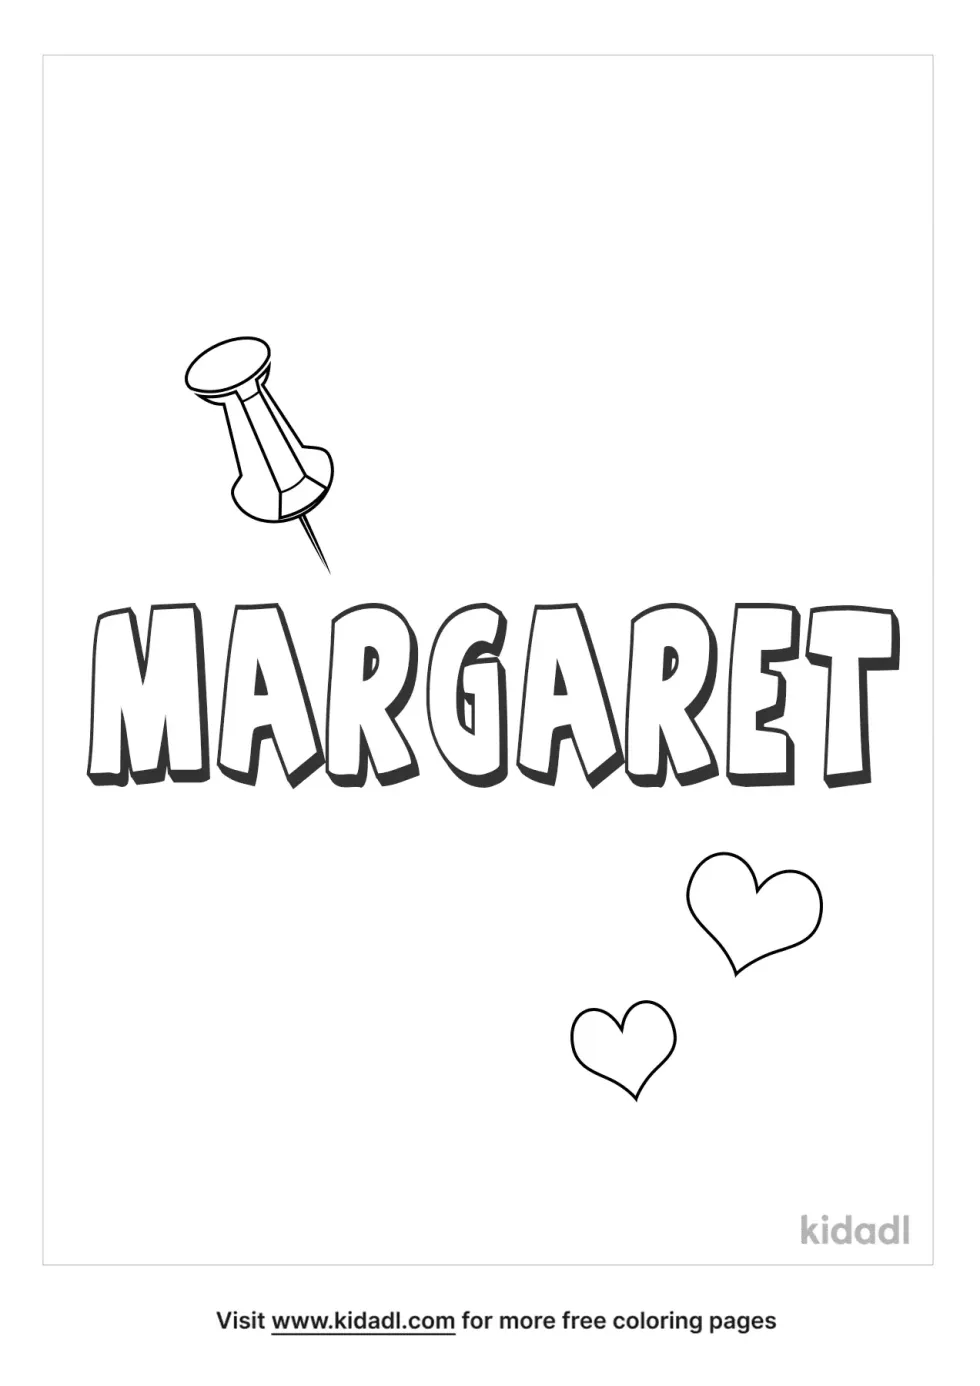 Name Margaret